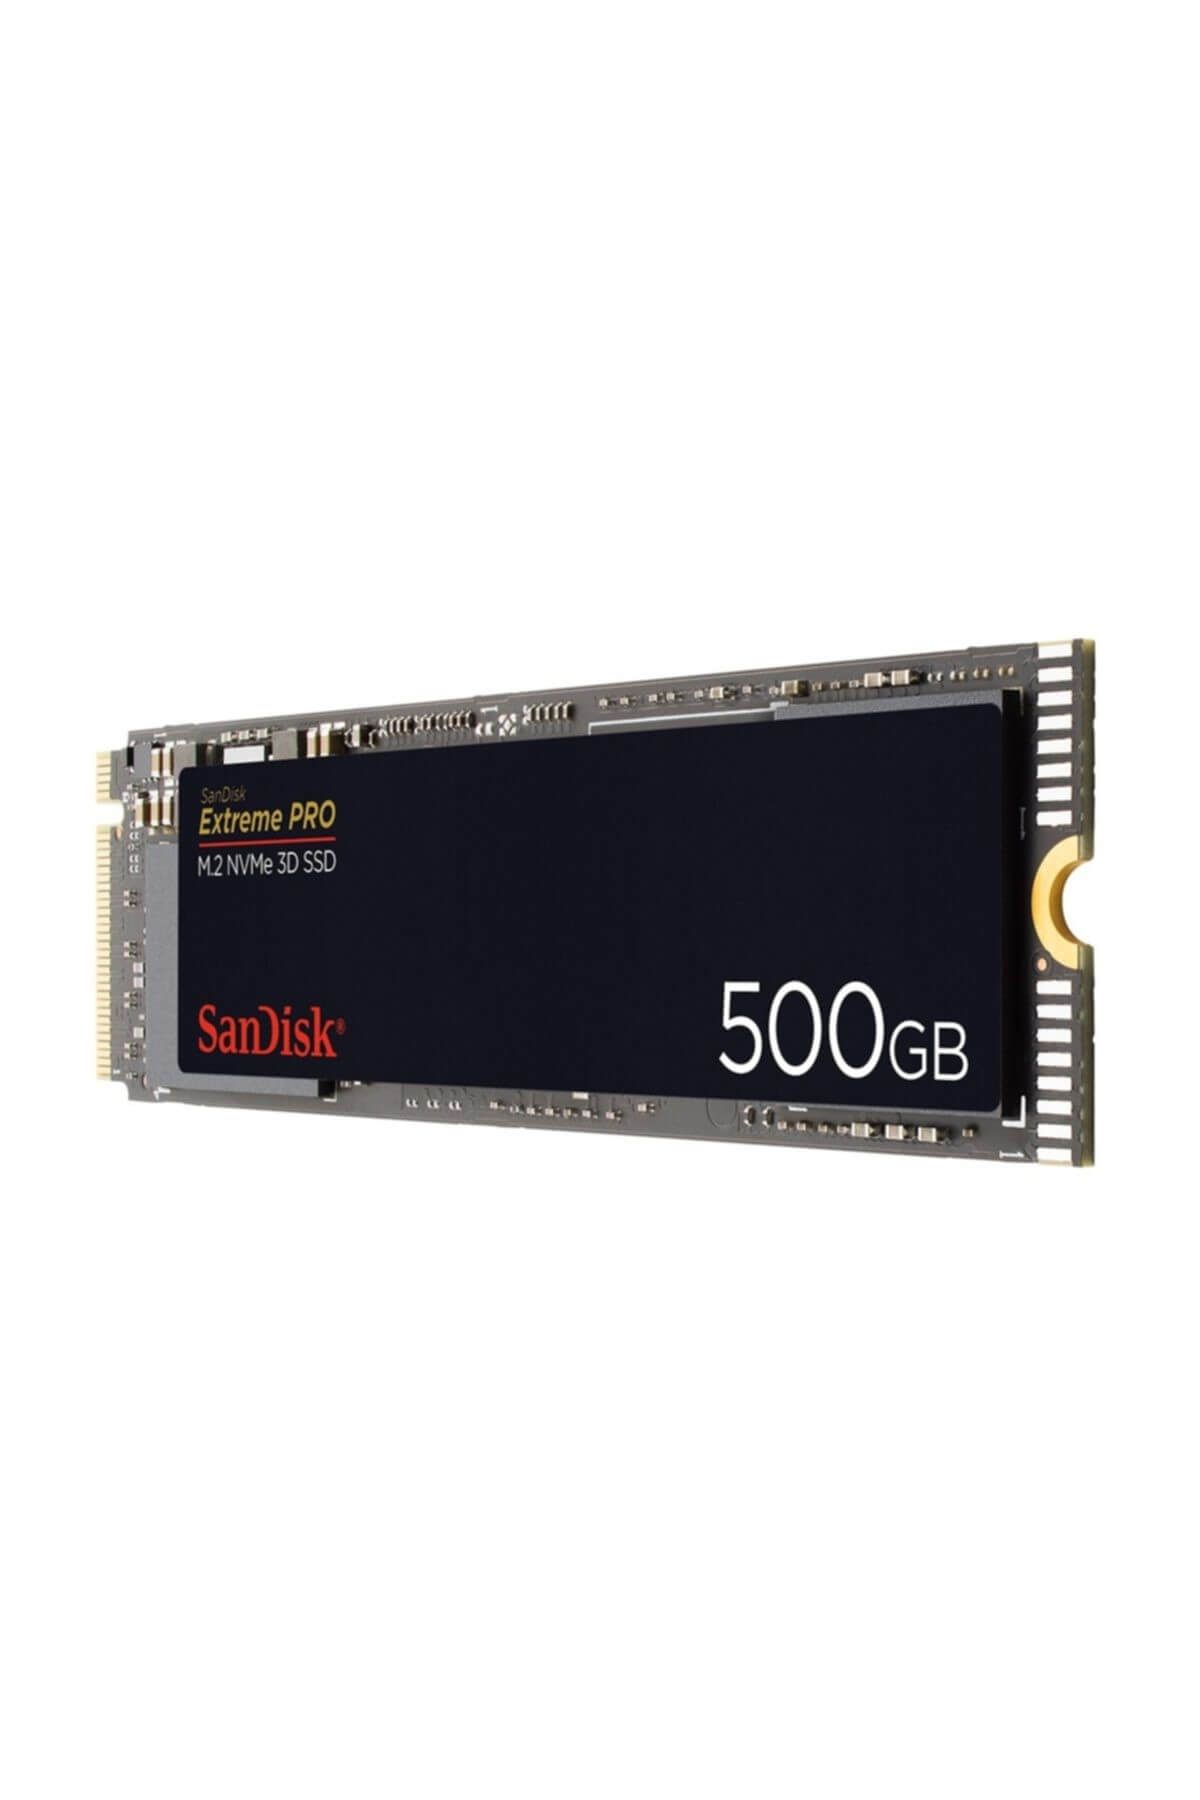 Sandisk Extreme PRO 500 GB SDSSDXPM2-500G-G25 3400/2500MBs M.2 NVME 3D SSD